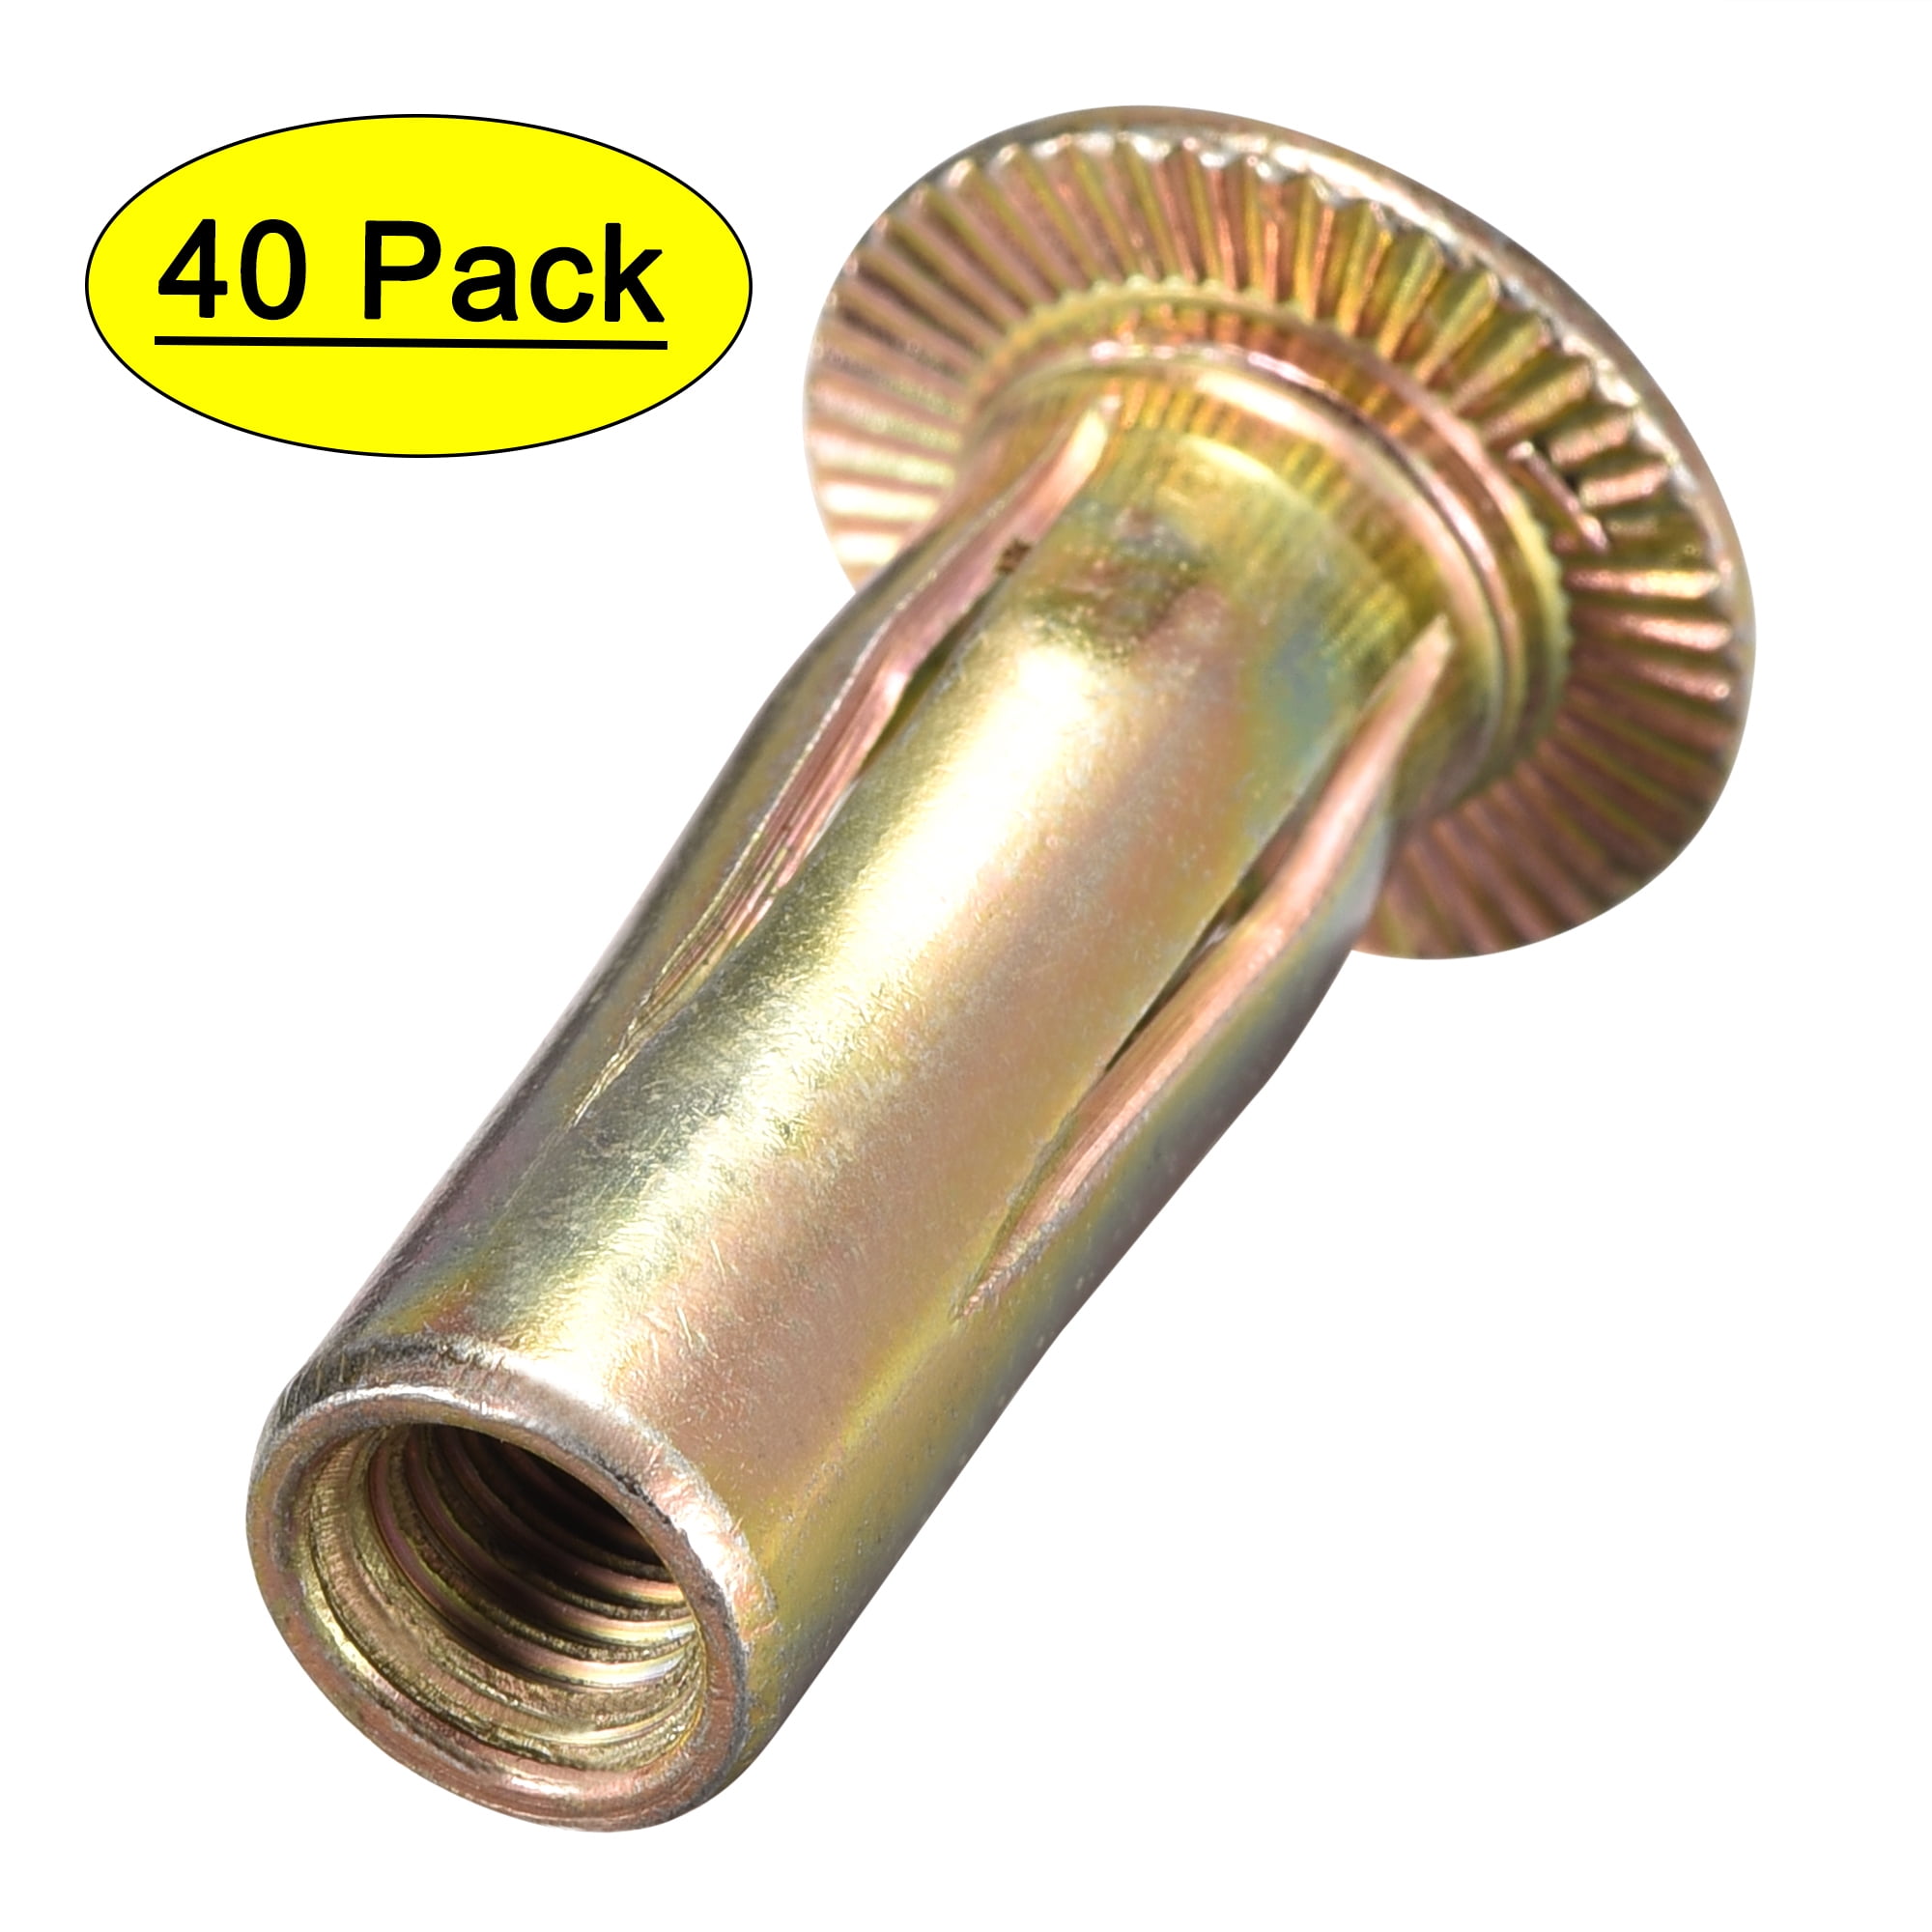 40Pcs 1/4”-20 Rivet Nuts Stainless Steel Threaded Insert Nut 1/4-20UNC Nutser... 